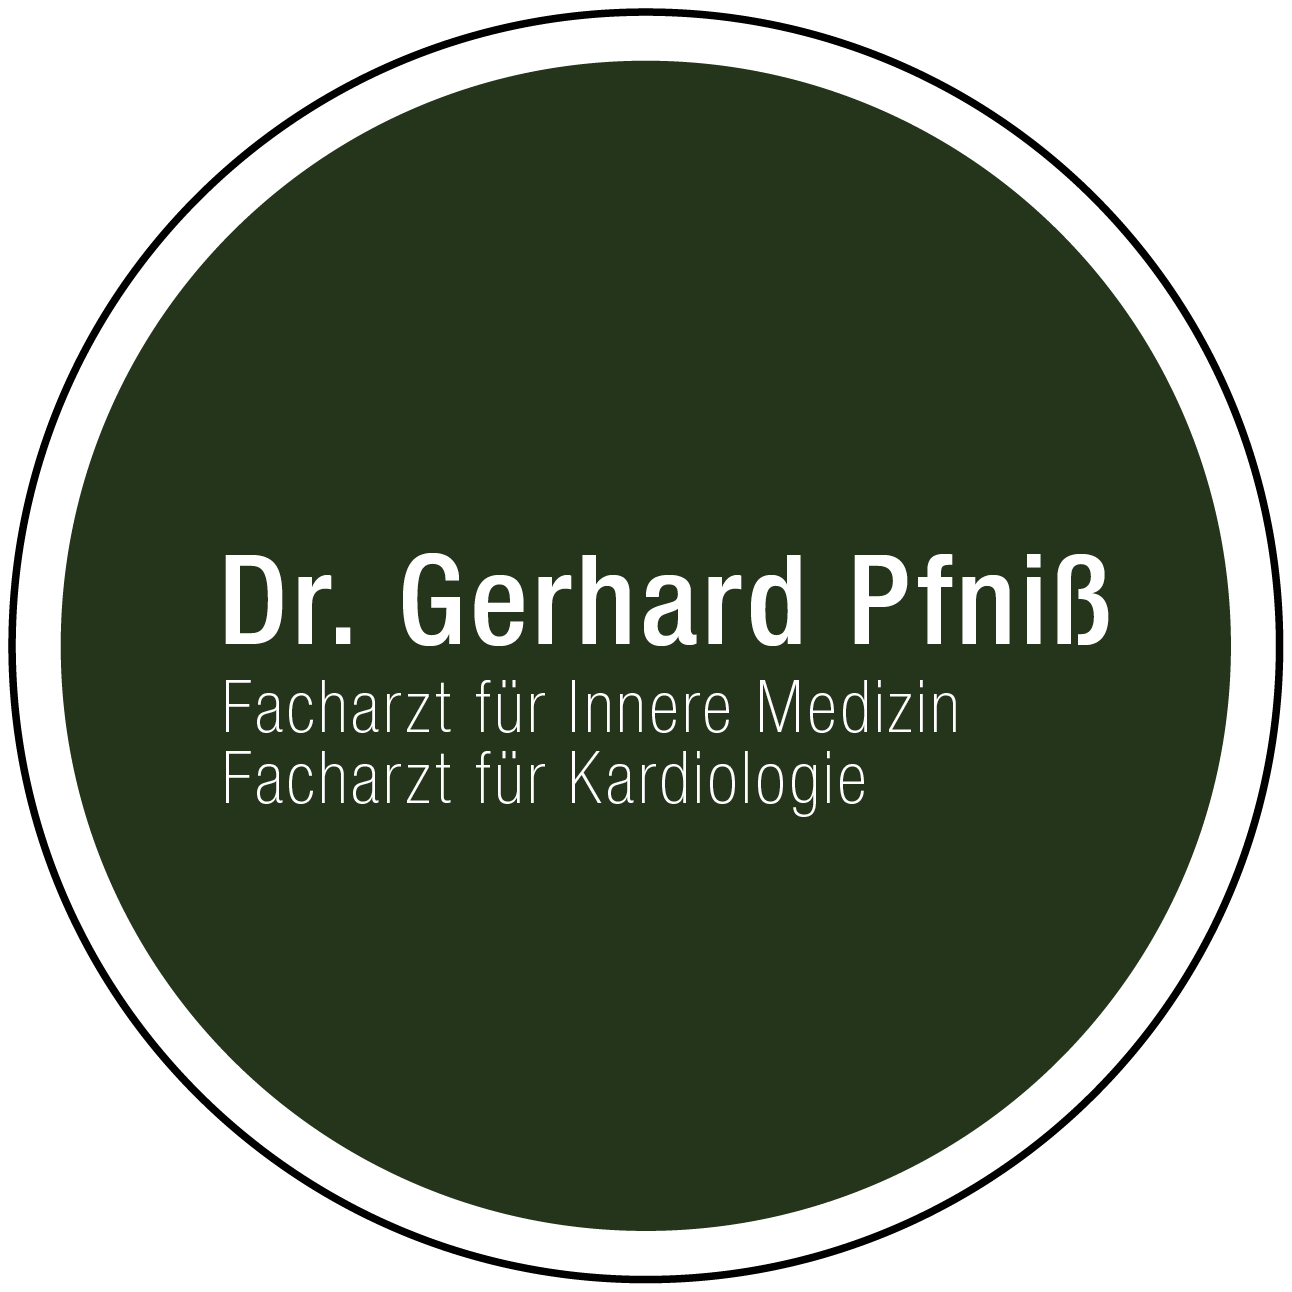 Dr. Gerhard Pfniss